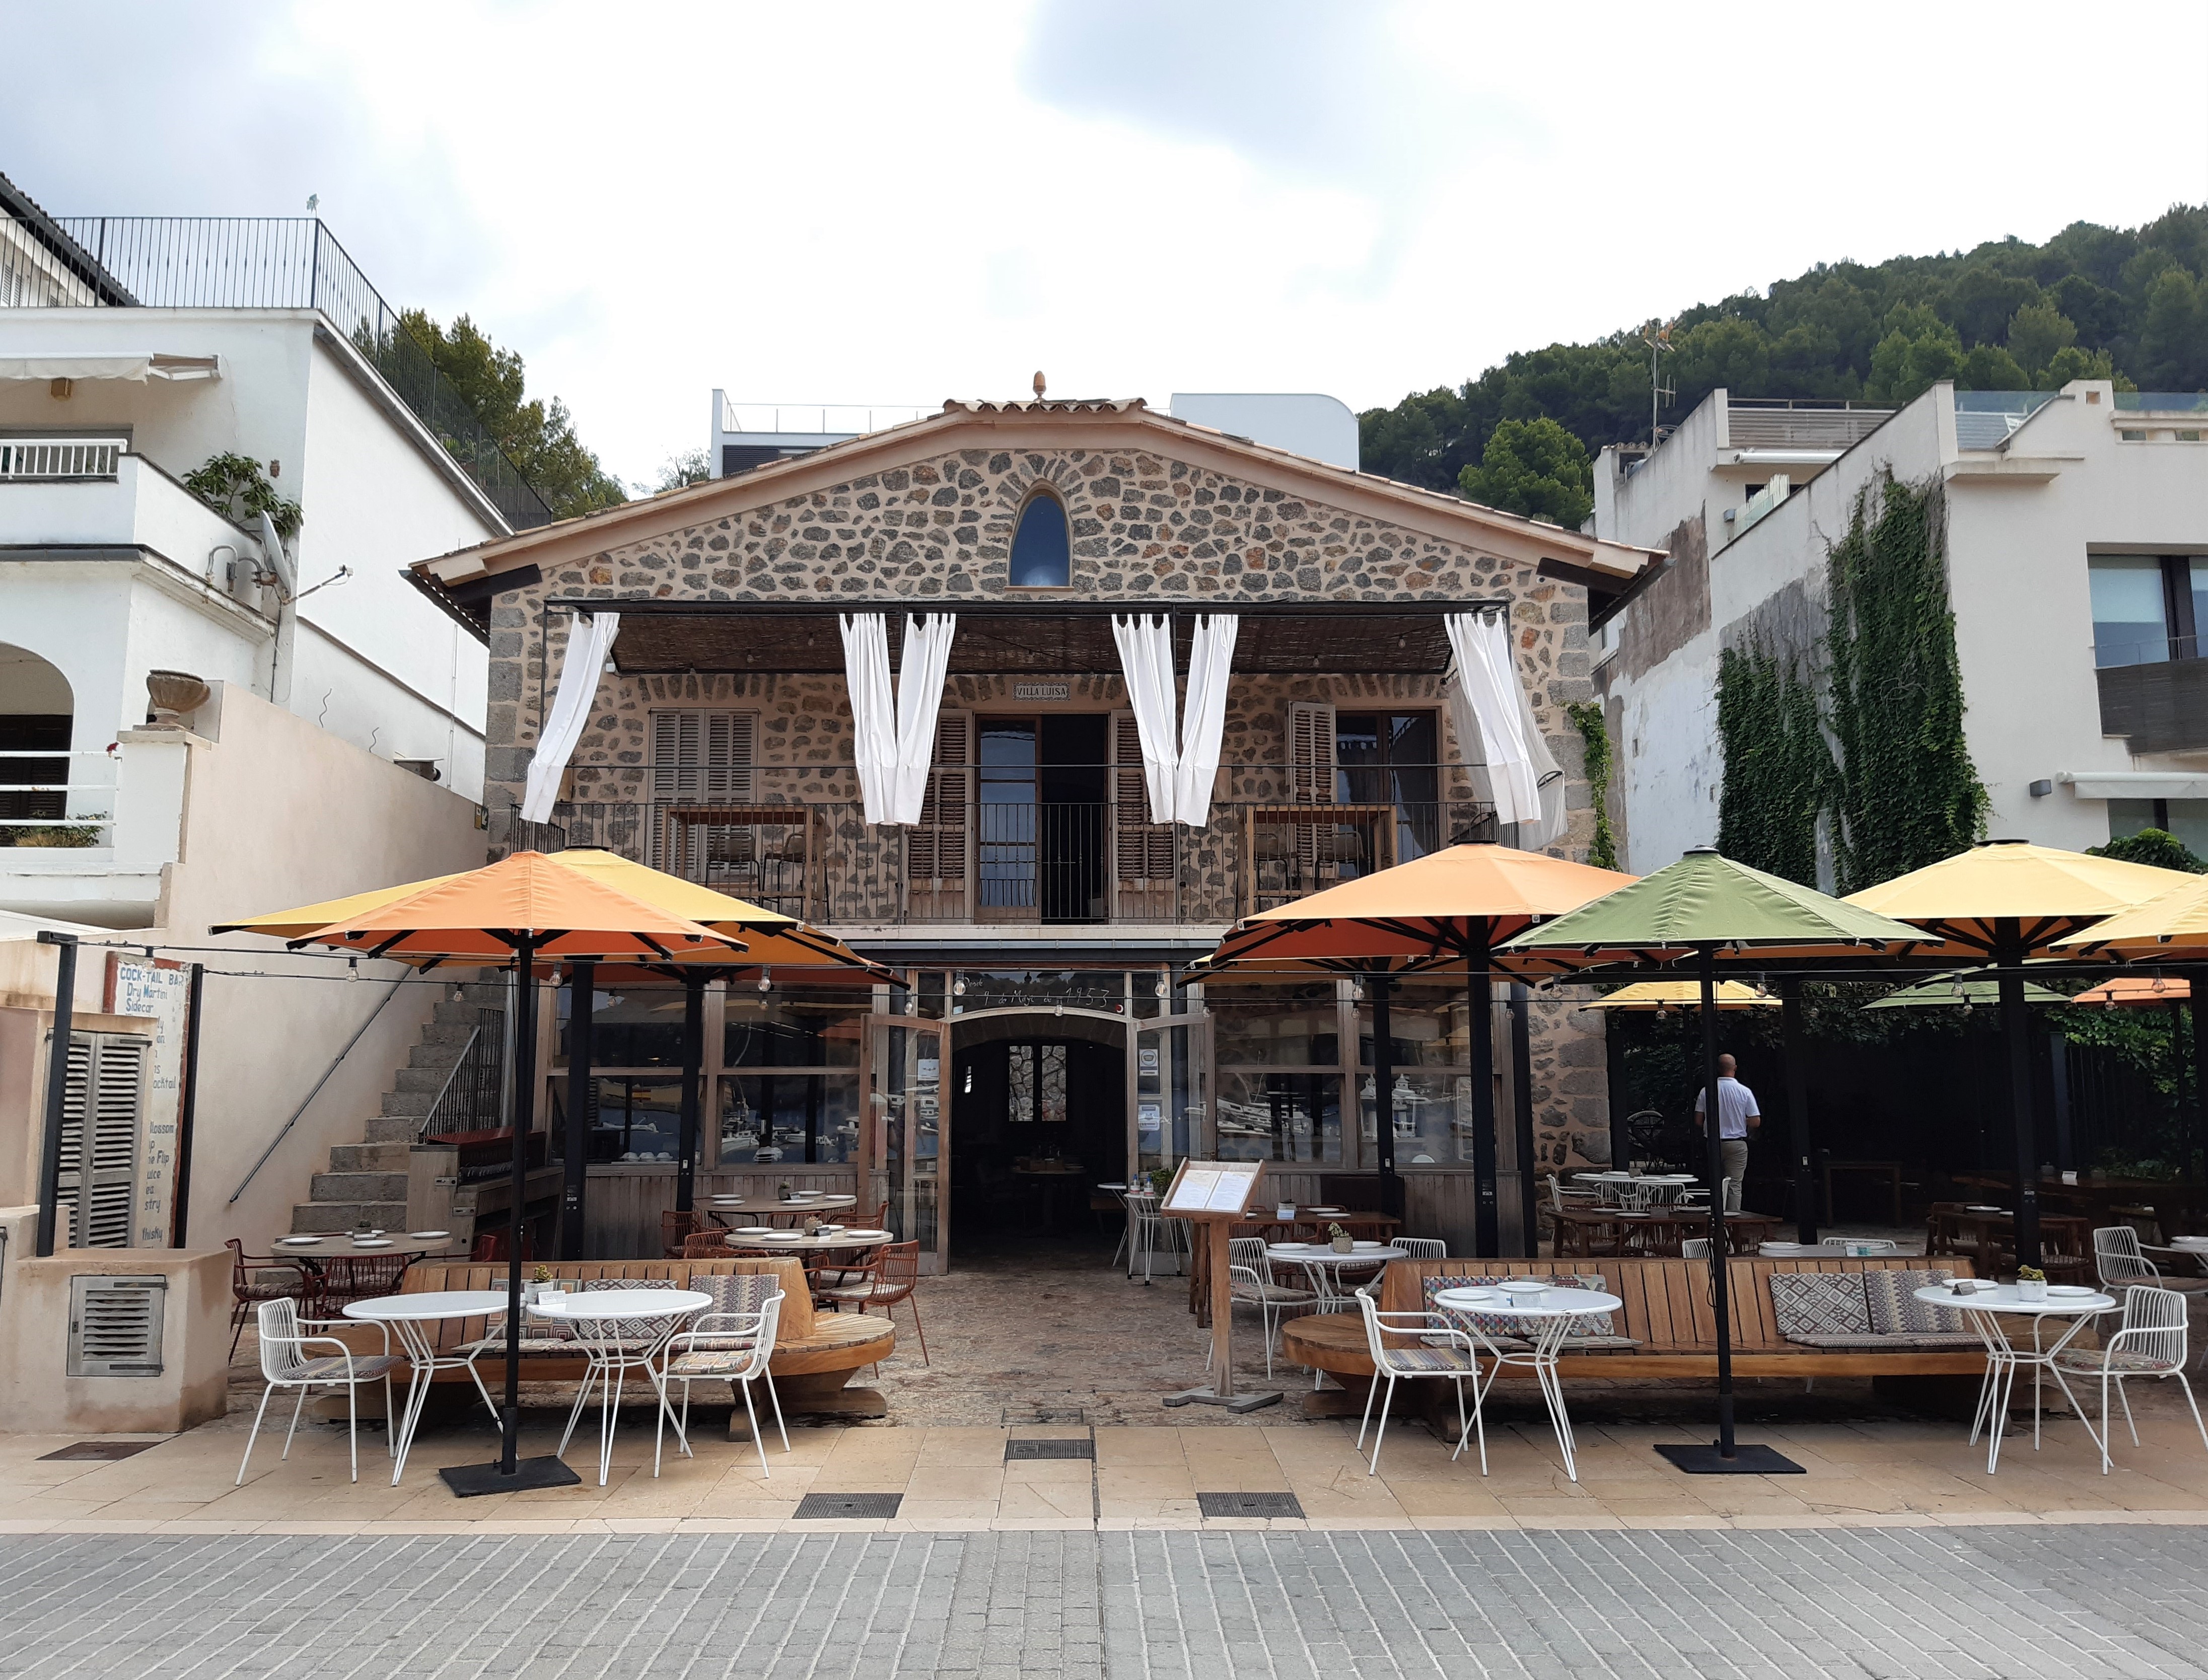 Restaurants en beachclubs op Mallorca